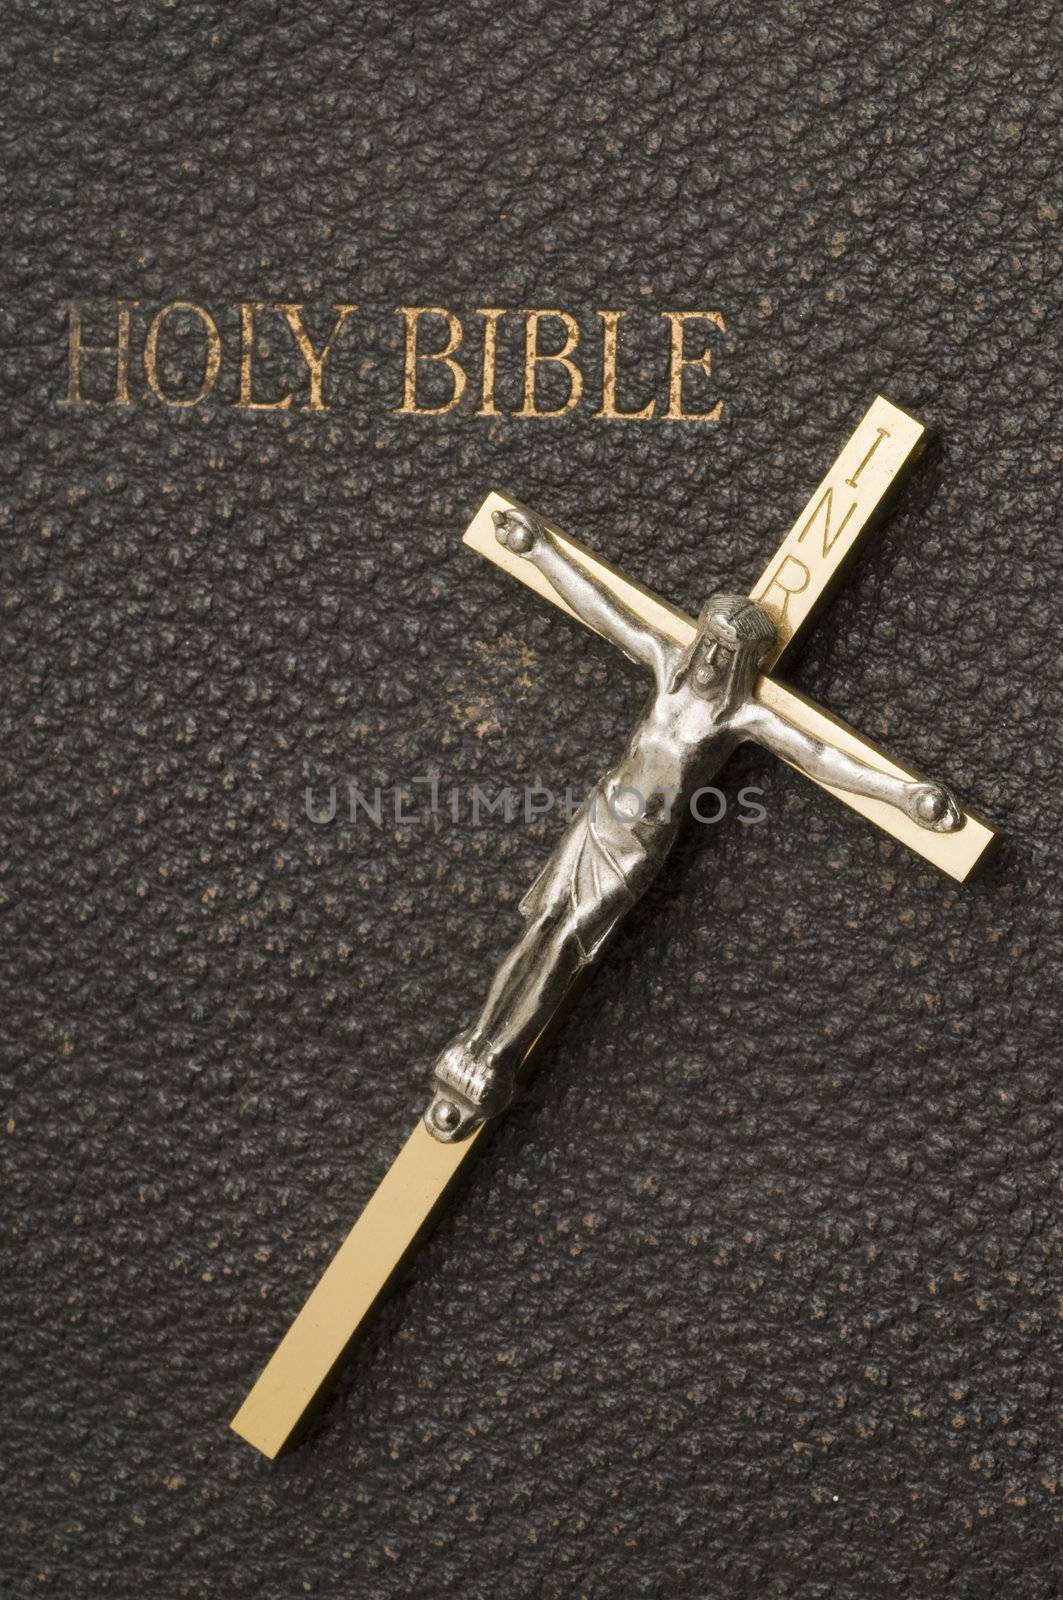 Cross on Antique Bible by Gordo25